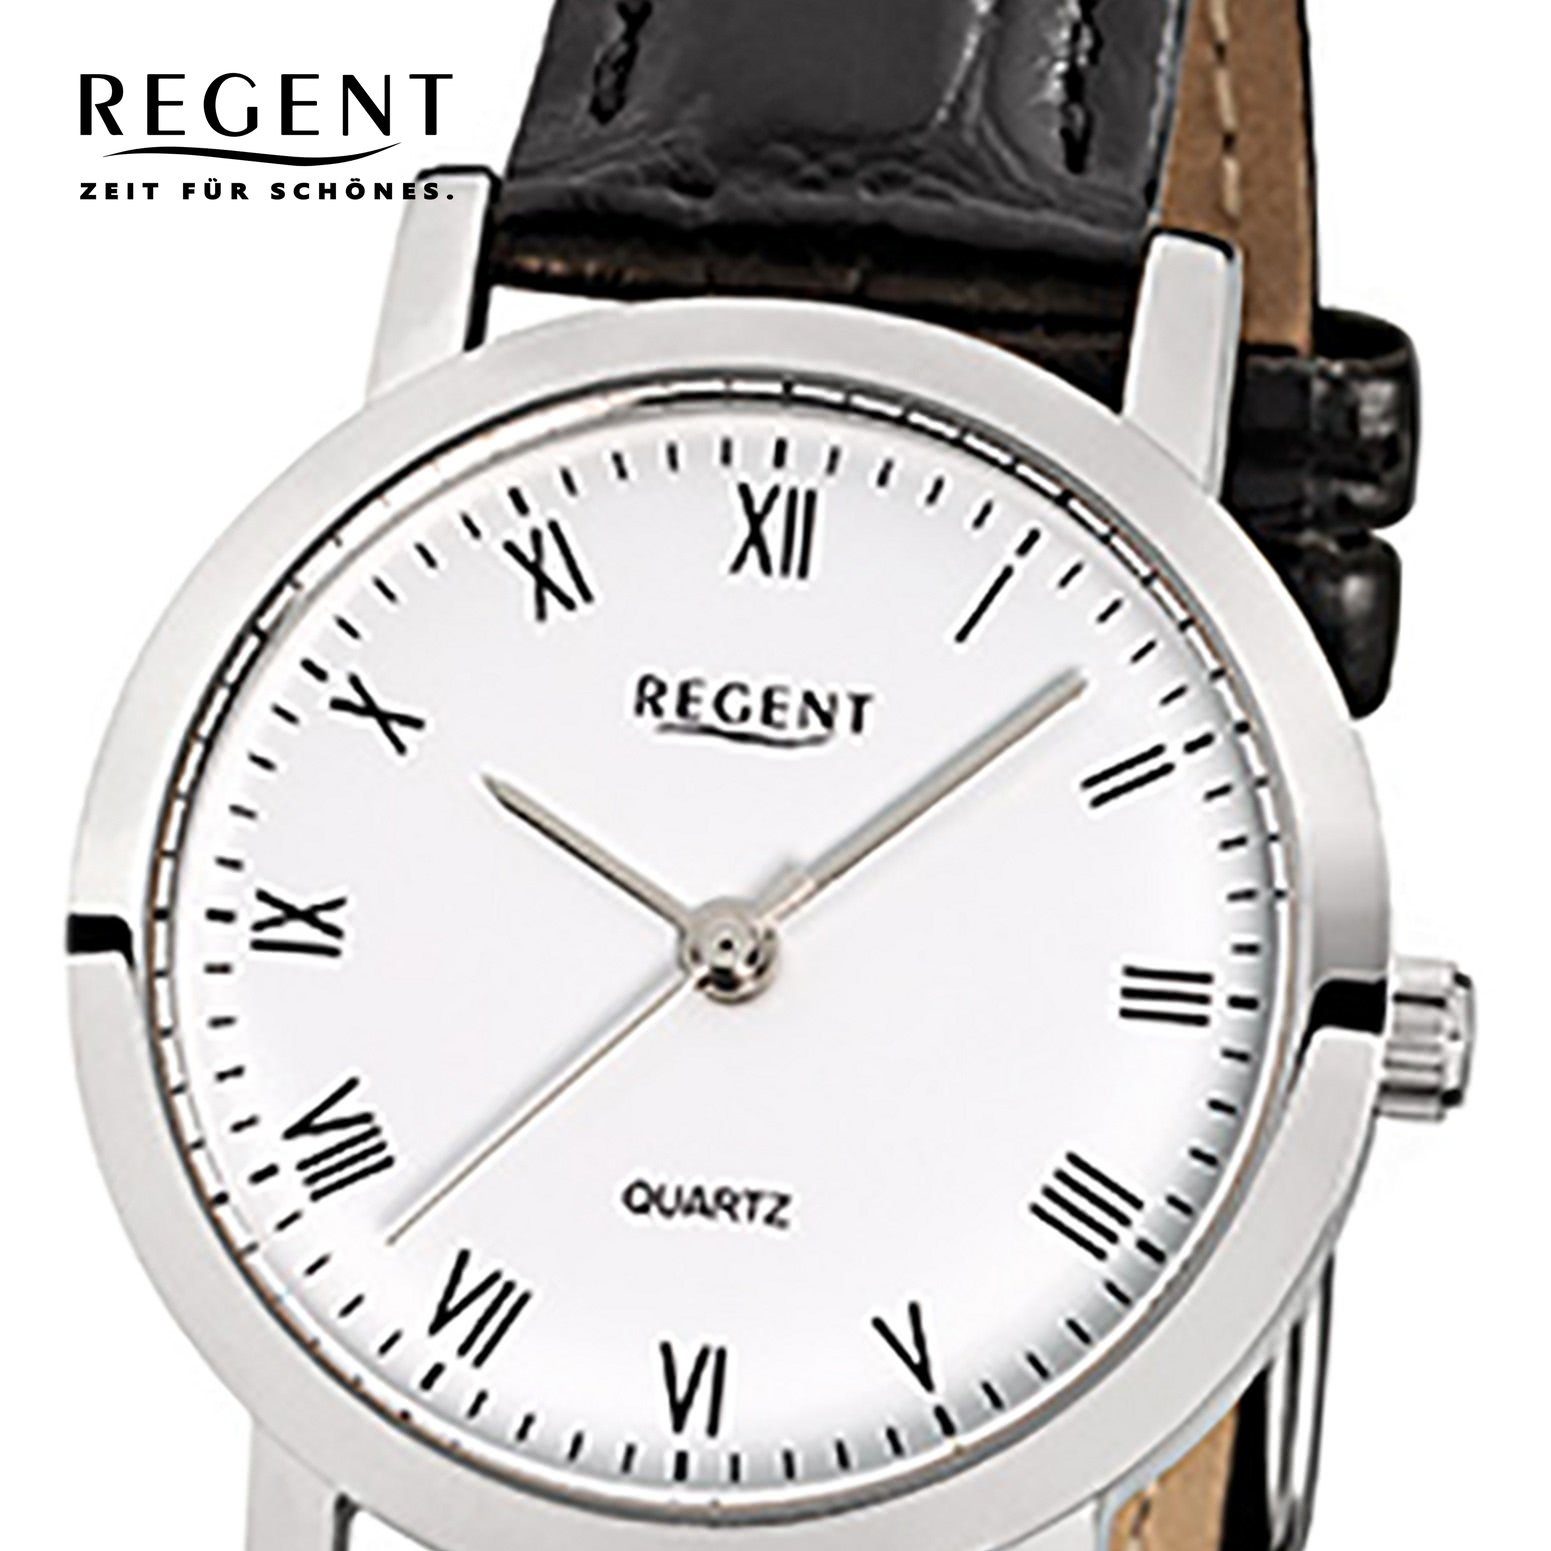 Regent Damen-Armbanduhr Lederarmband Regent 28mm), Armbanduhr Damen Quarzuhr rund, Analog, schwarz klein (ca.